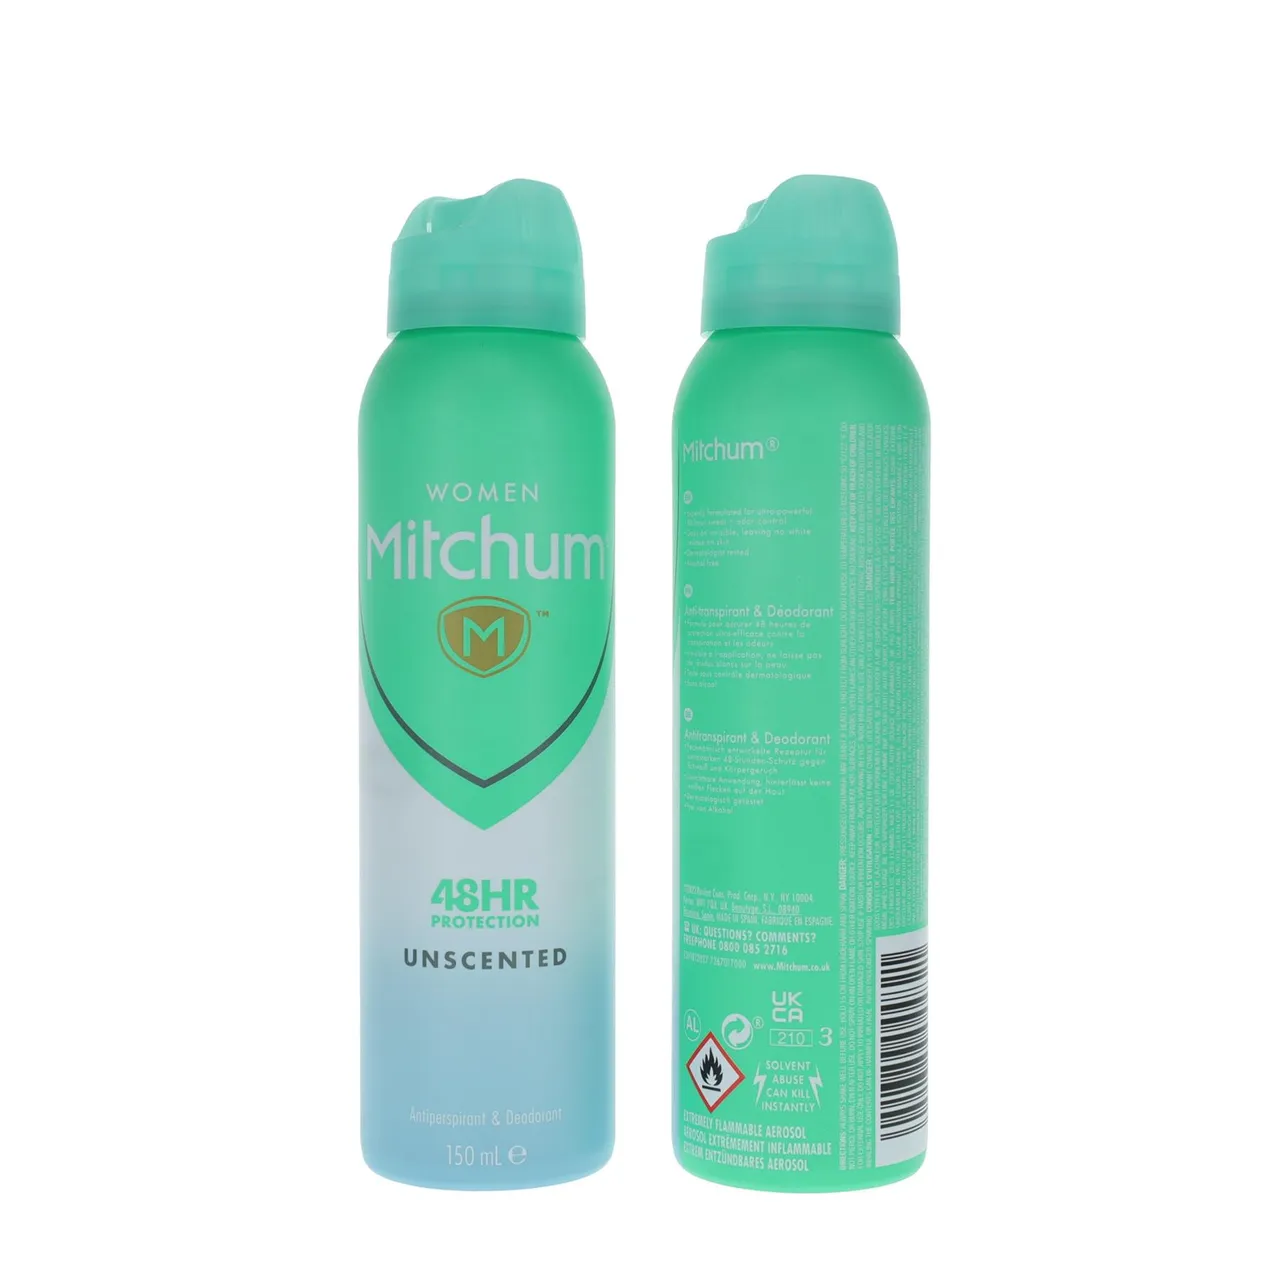 Mitchum Women Unscented Antiperspirant & Deodorant 150ml Spray - 48HR Protection